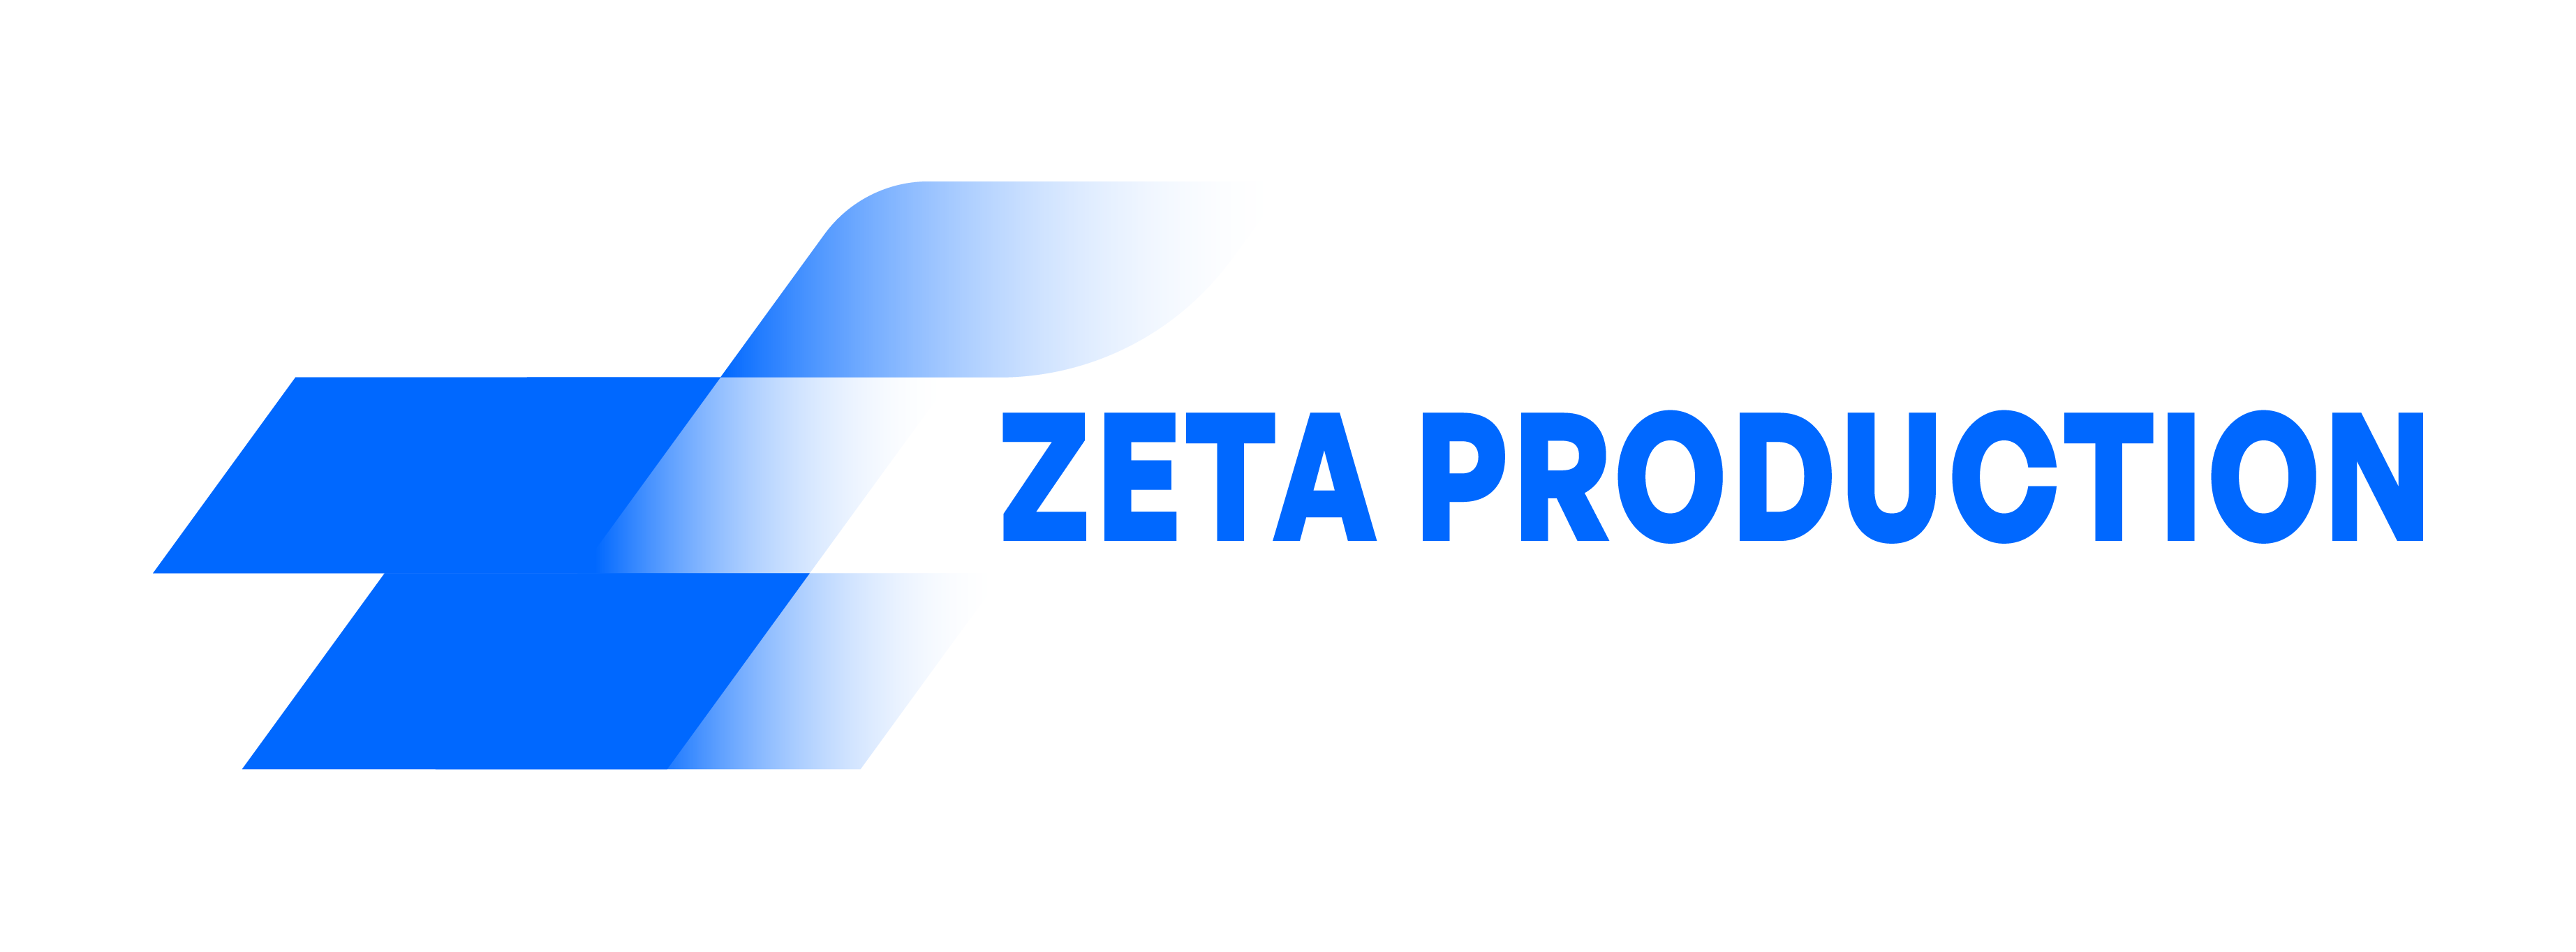 Zeta Production Logo - Landing page
